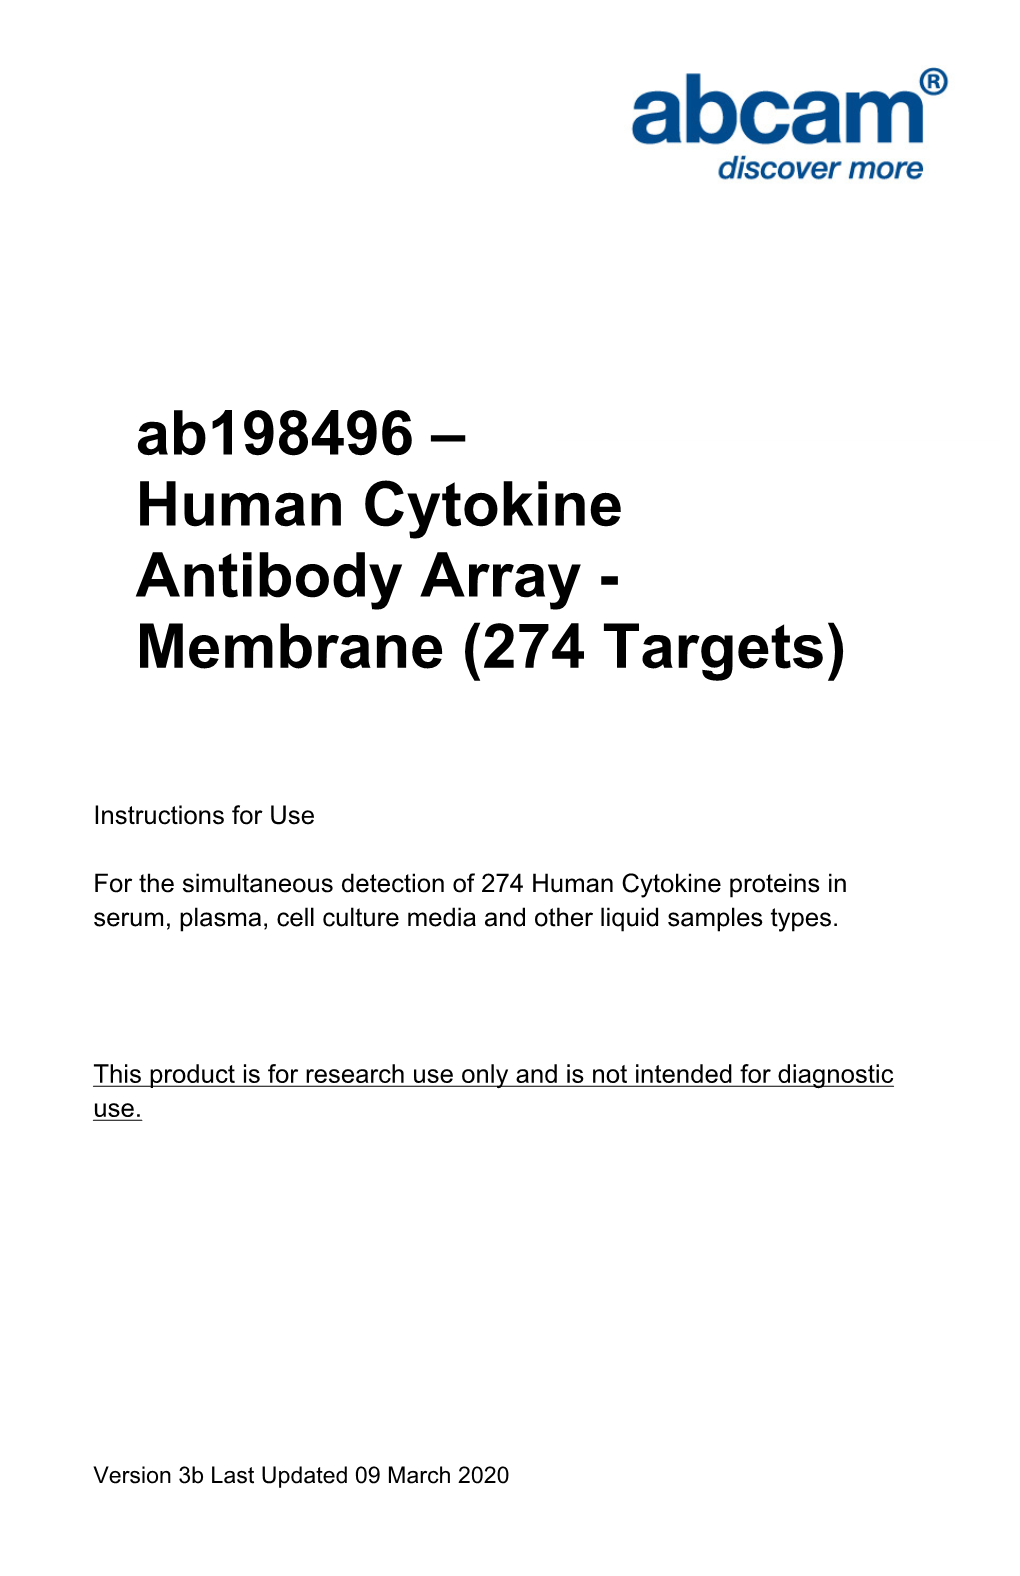 Human Cytokine Antibody Array - Membrane (274 Targets)